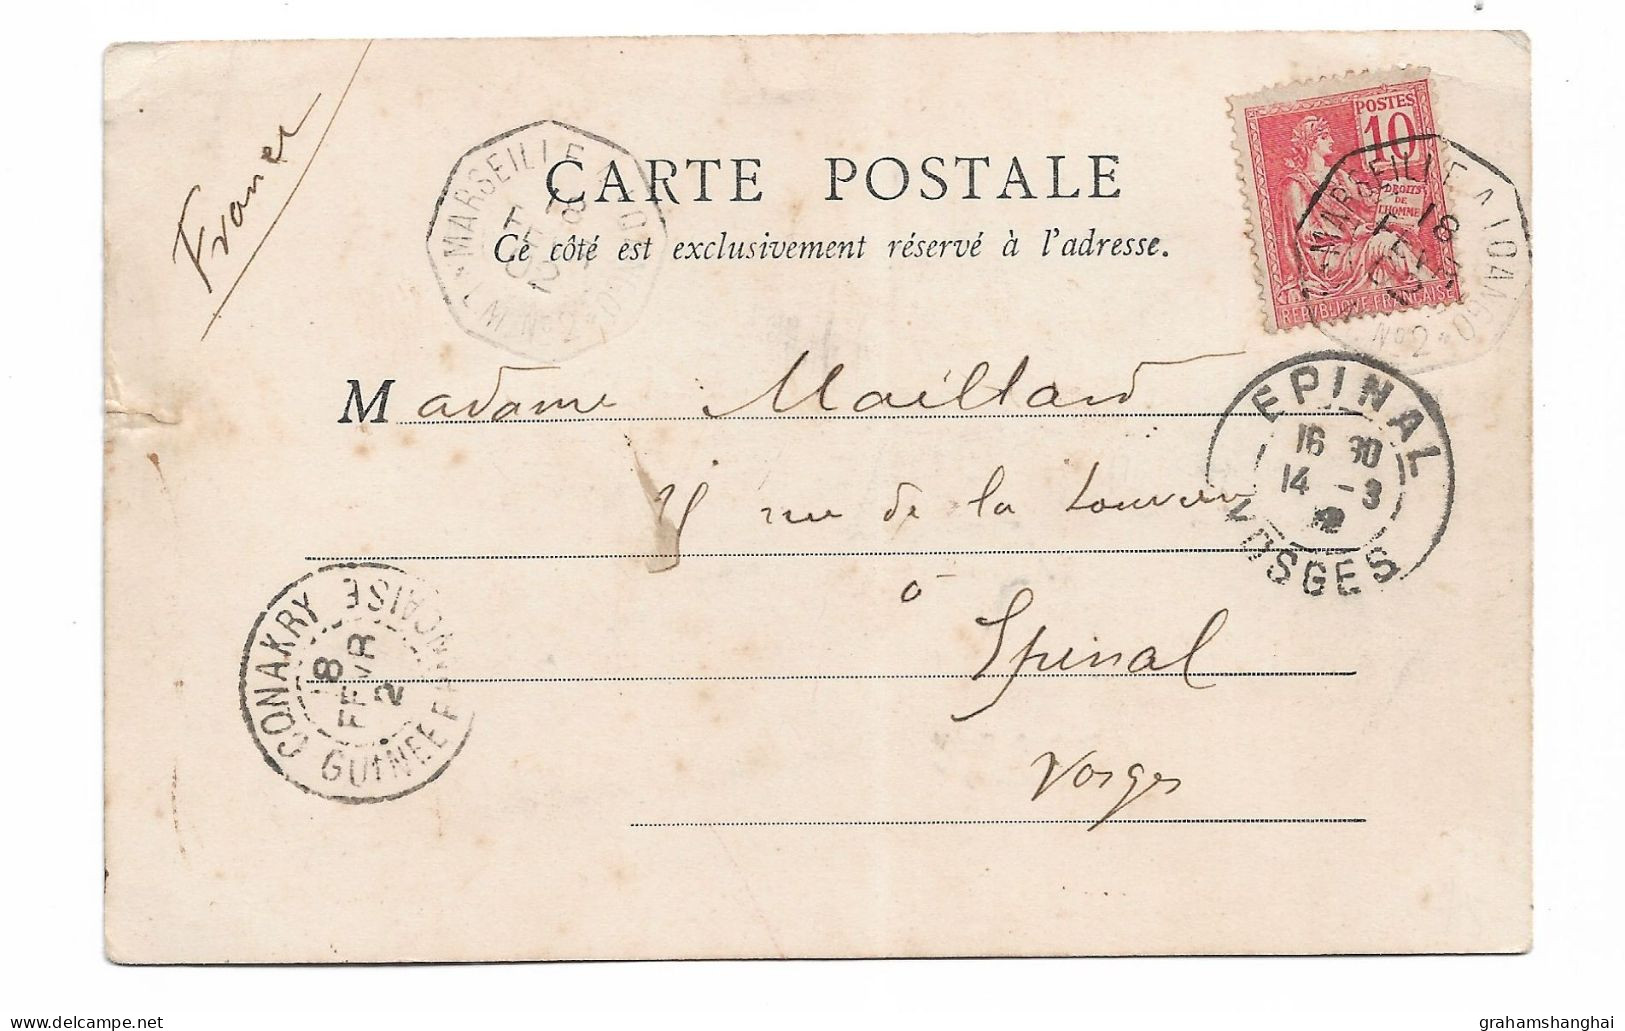 Postcard Sudan Soudan Post De Salde Trading Post ? Undivided Posted 1902 Conakry French Guinea - Soudan